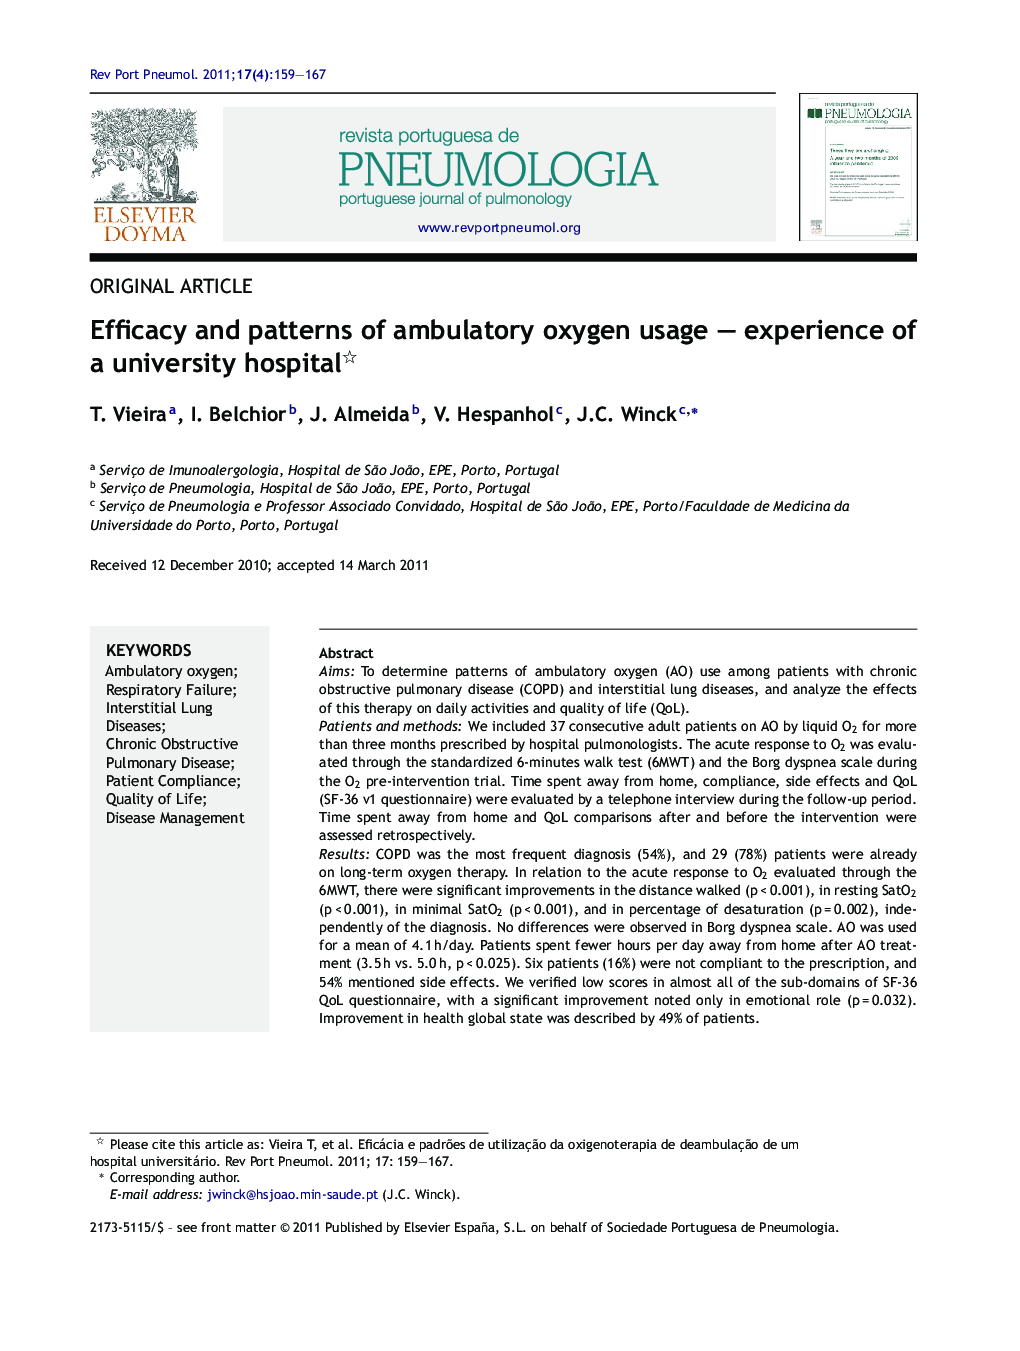 Efficacy and patterns of ambulatory oxygen usage - experience of a university hospital